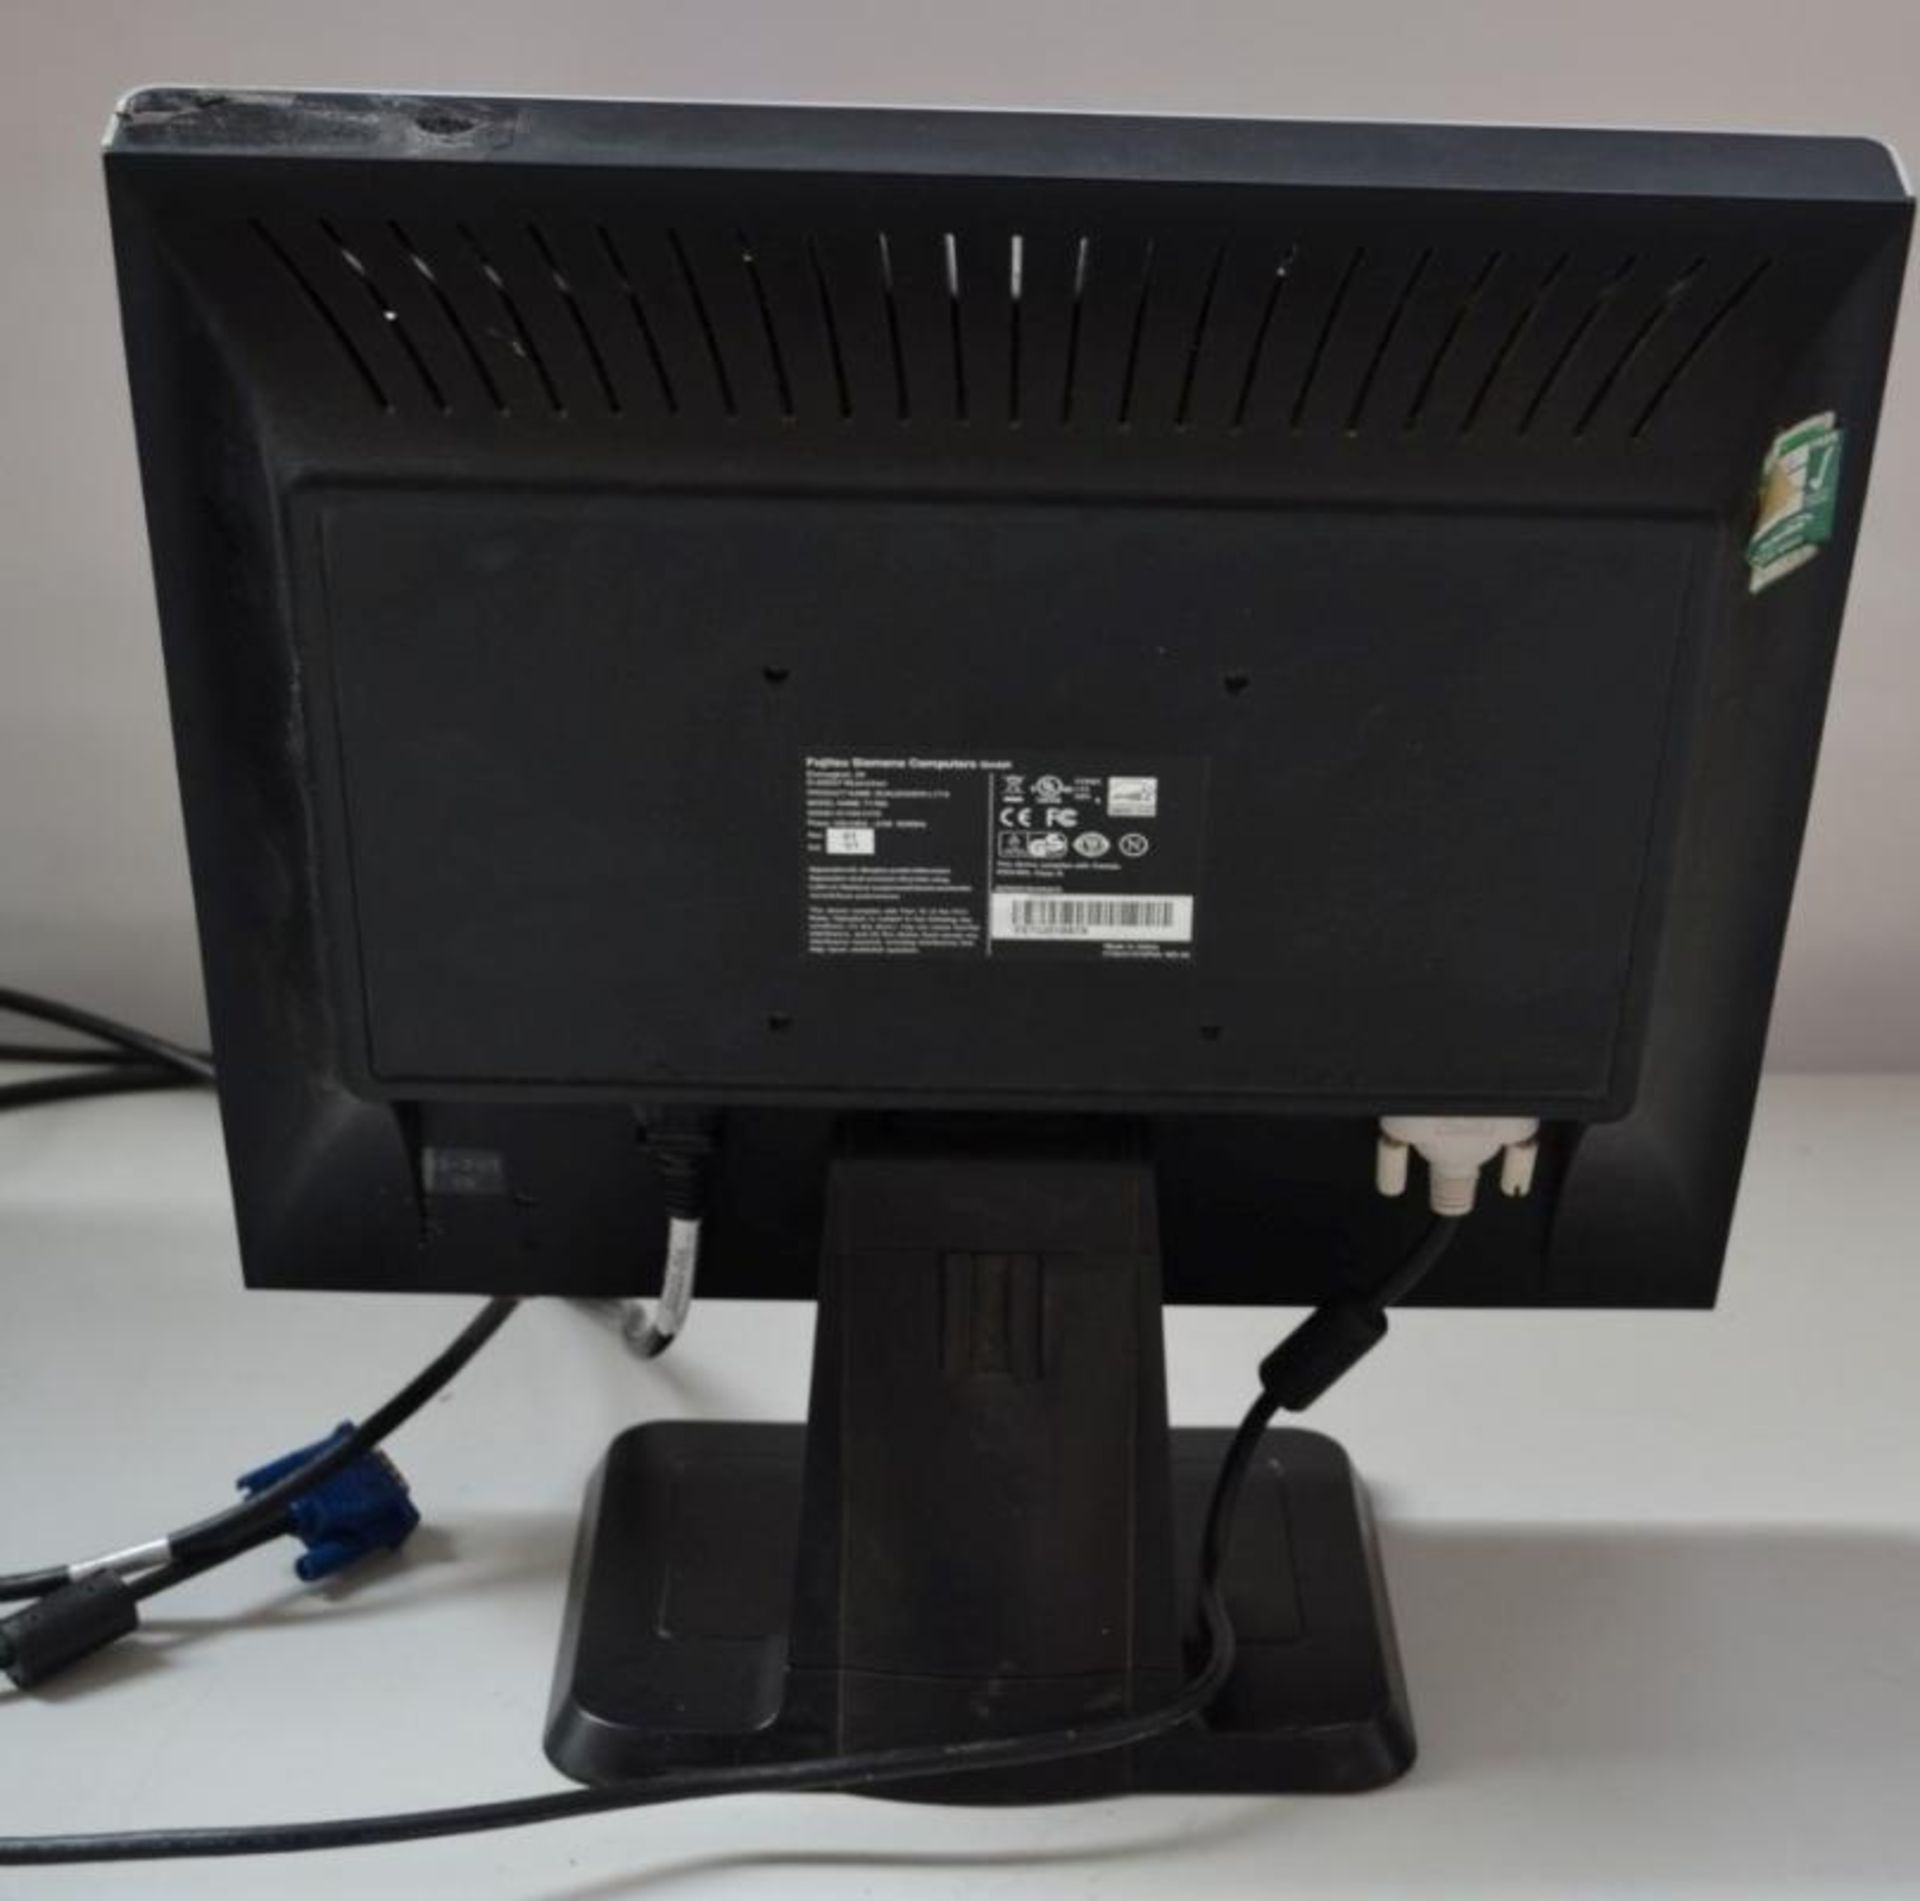 1 x Fujitsu Siemens T17BA 17"LCD PC Monitor - Ref J2265 - CL394 - Location: Altrincham WA14 - HKPal3 - Image 3 of 3